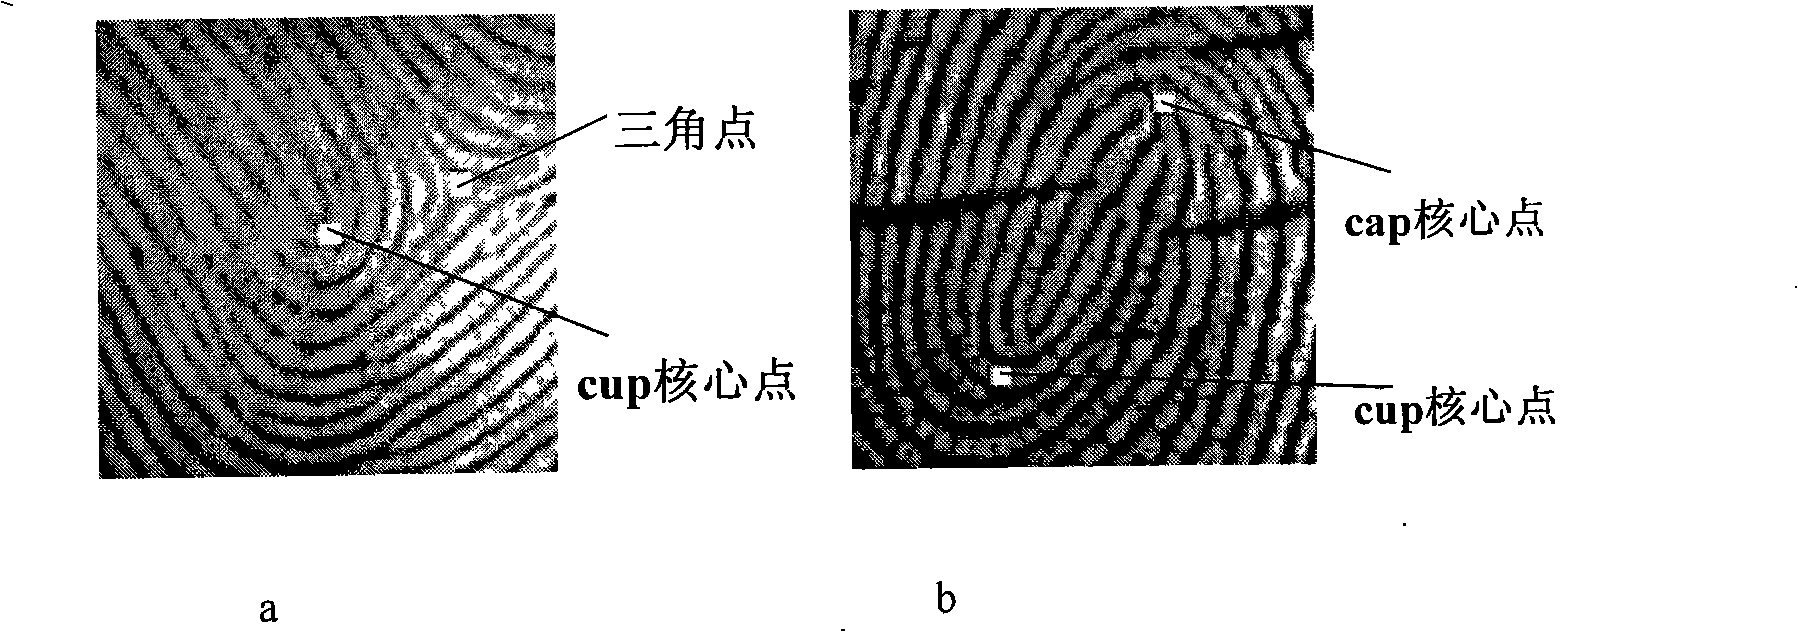 Rapid fingerprint identification method